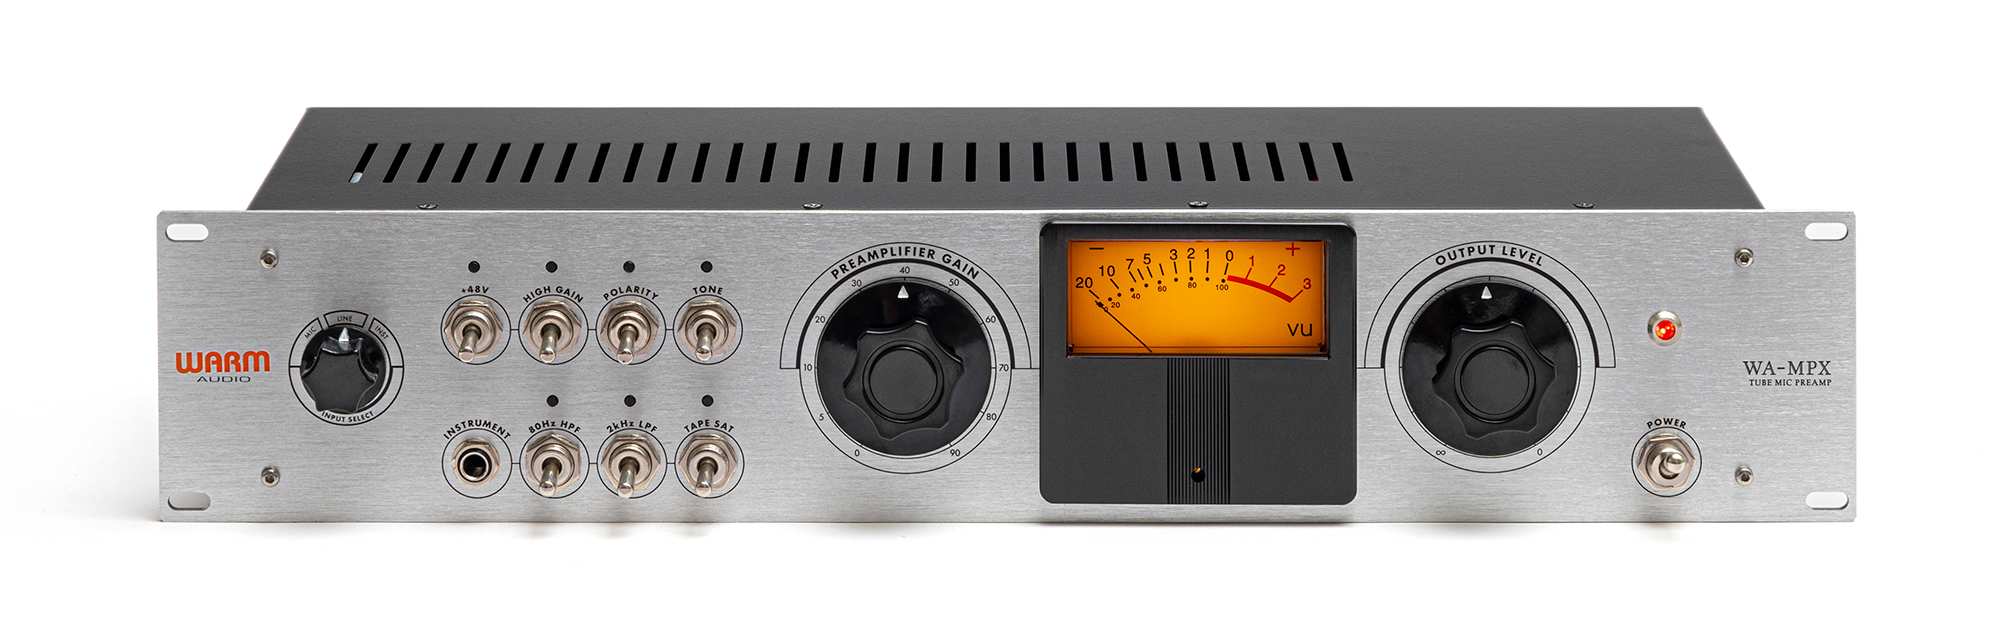 Warm Audio WA-MPX front panel